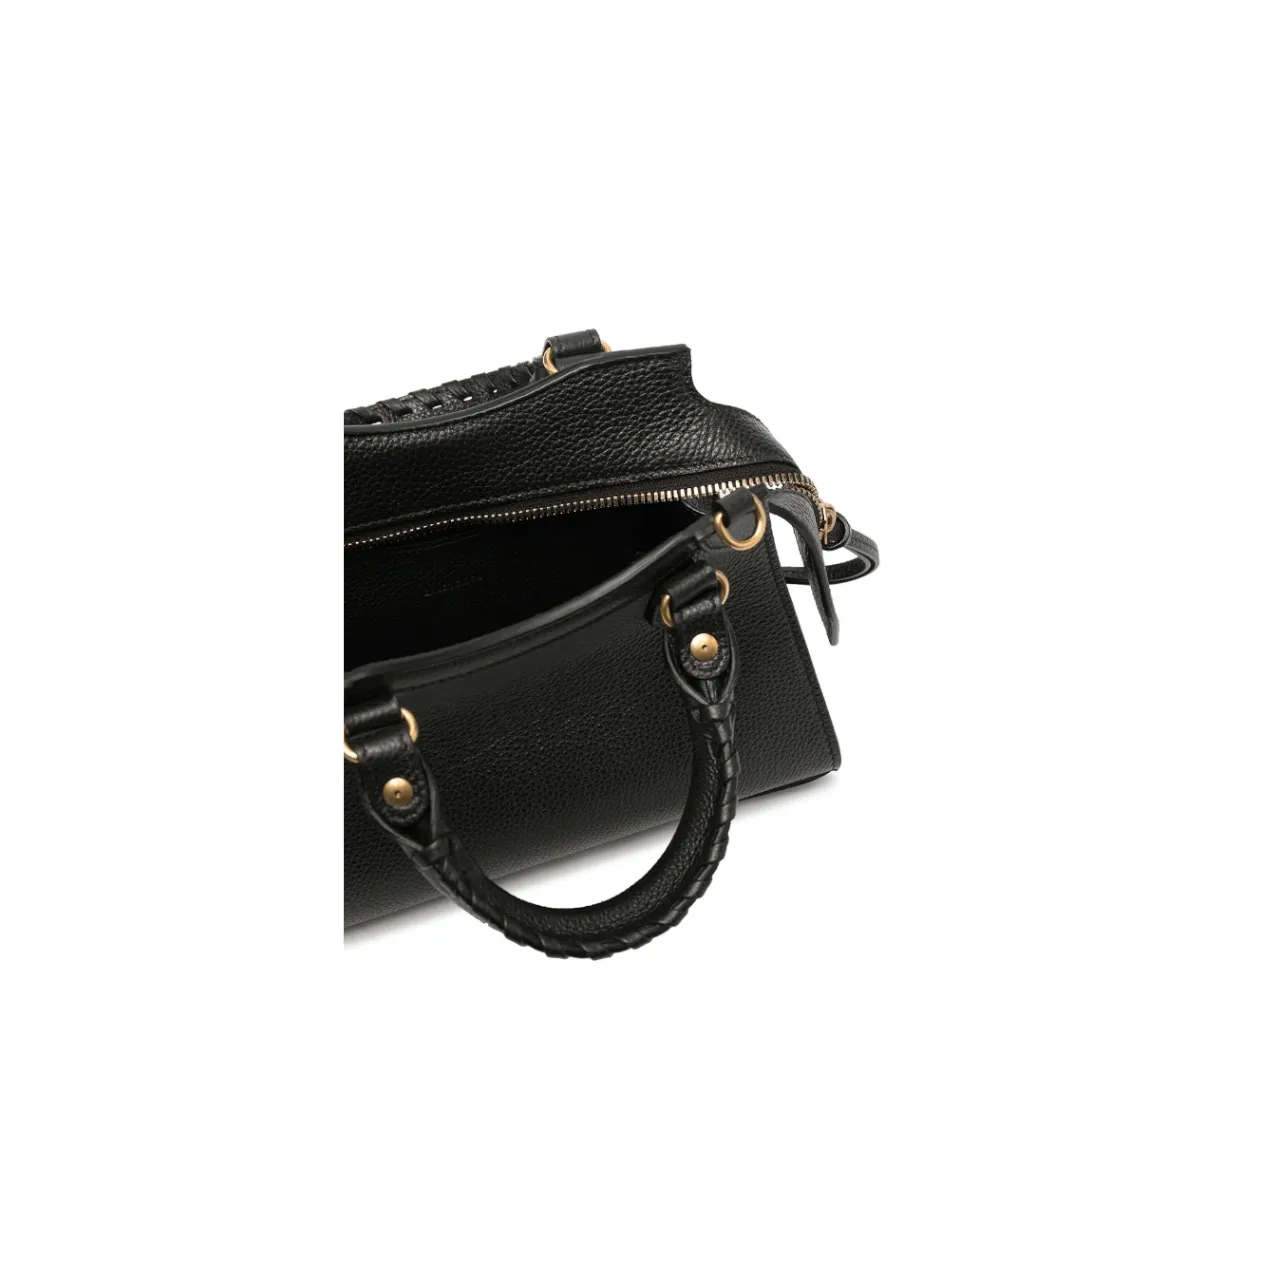 Neo Classic mini top handle bag